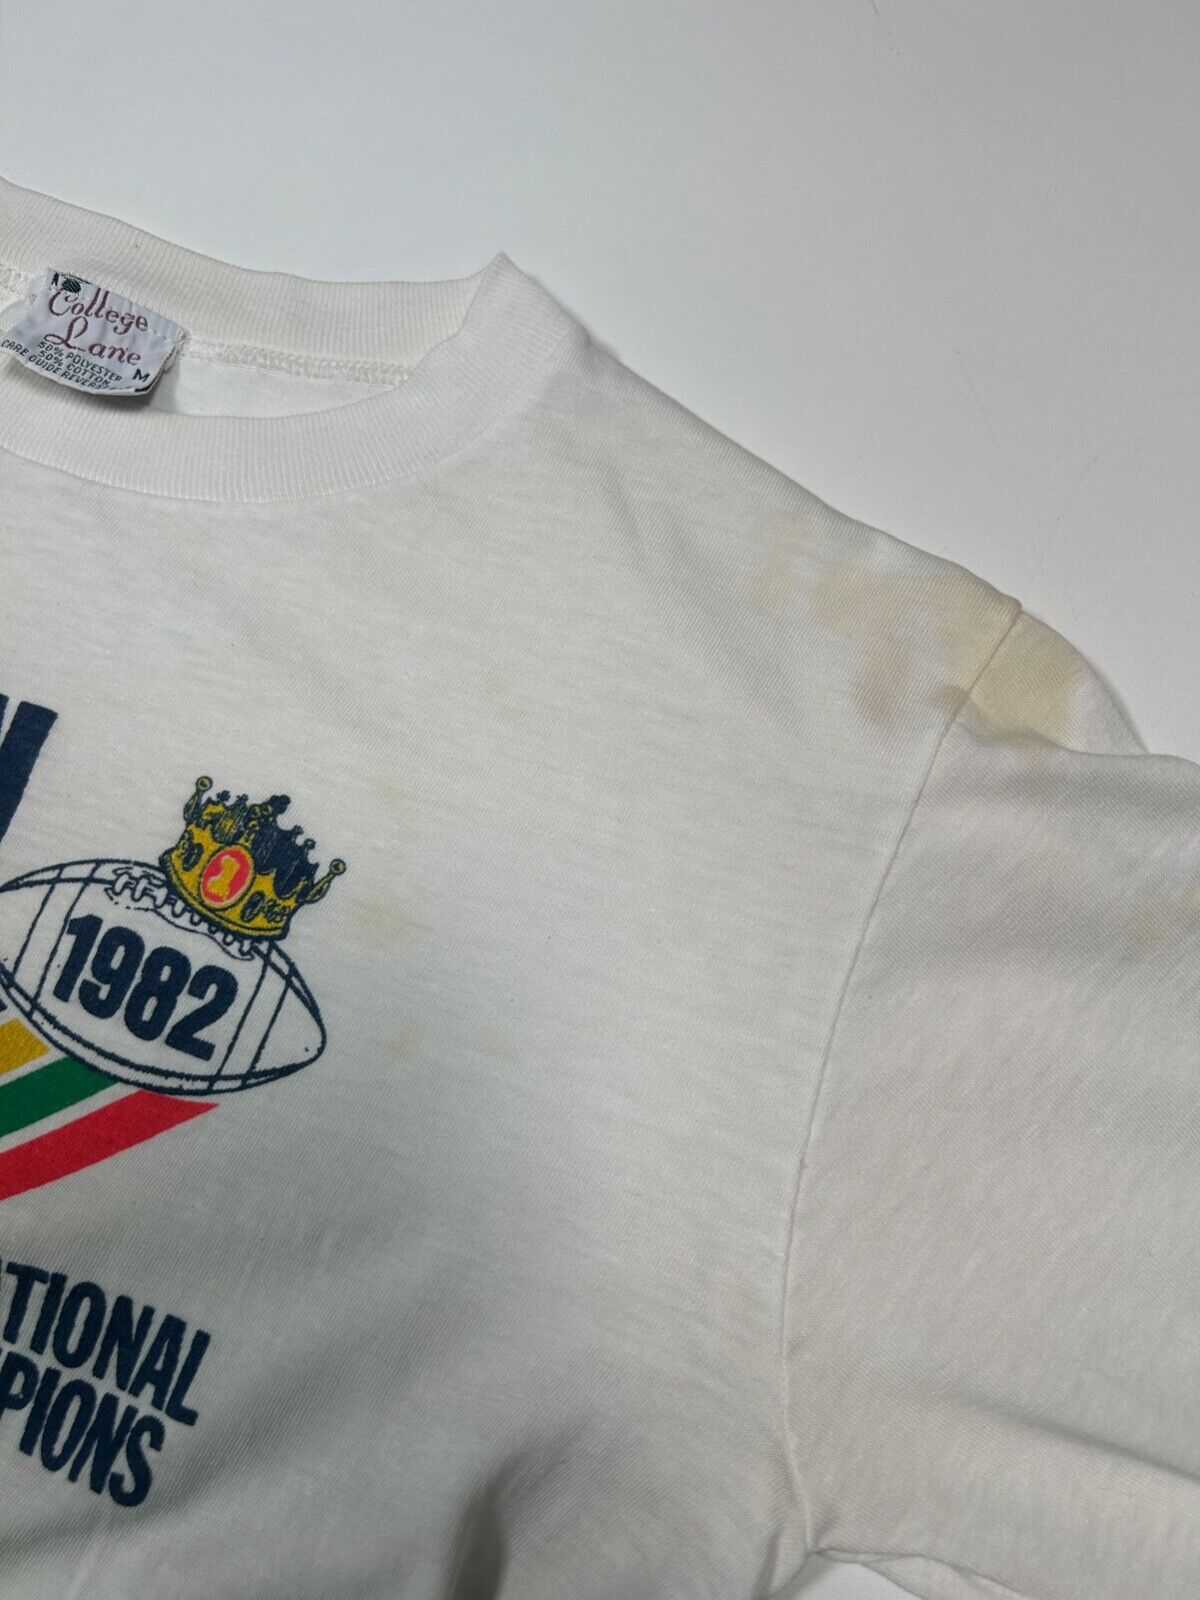 Vintage 1982 Penn State Nittany Lions National Champs FootballT-Shirt Medium 80s